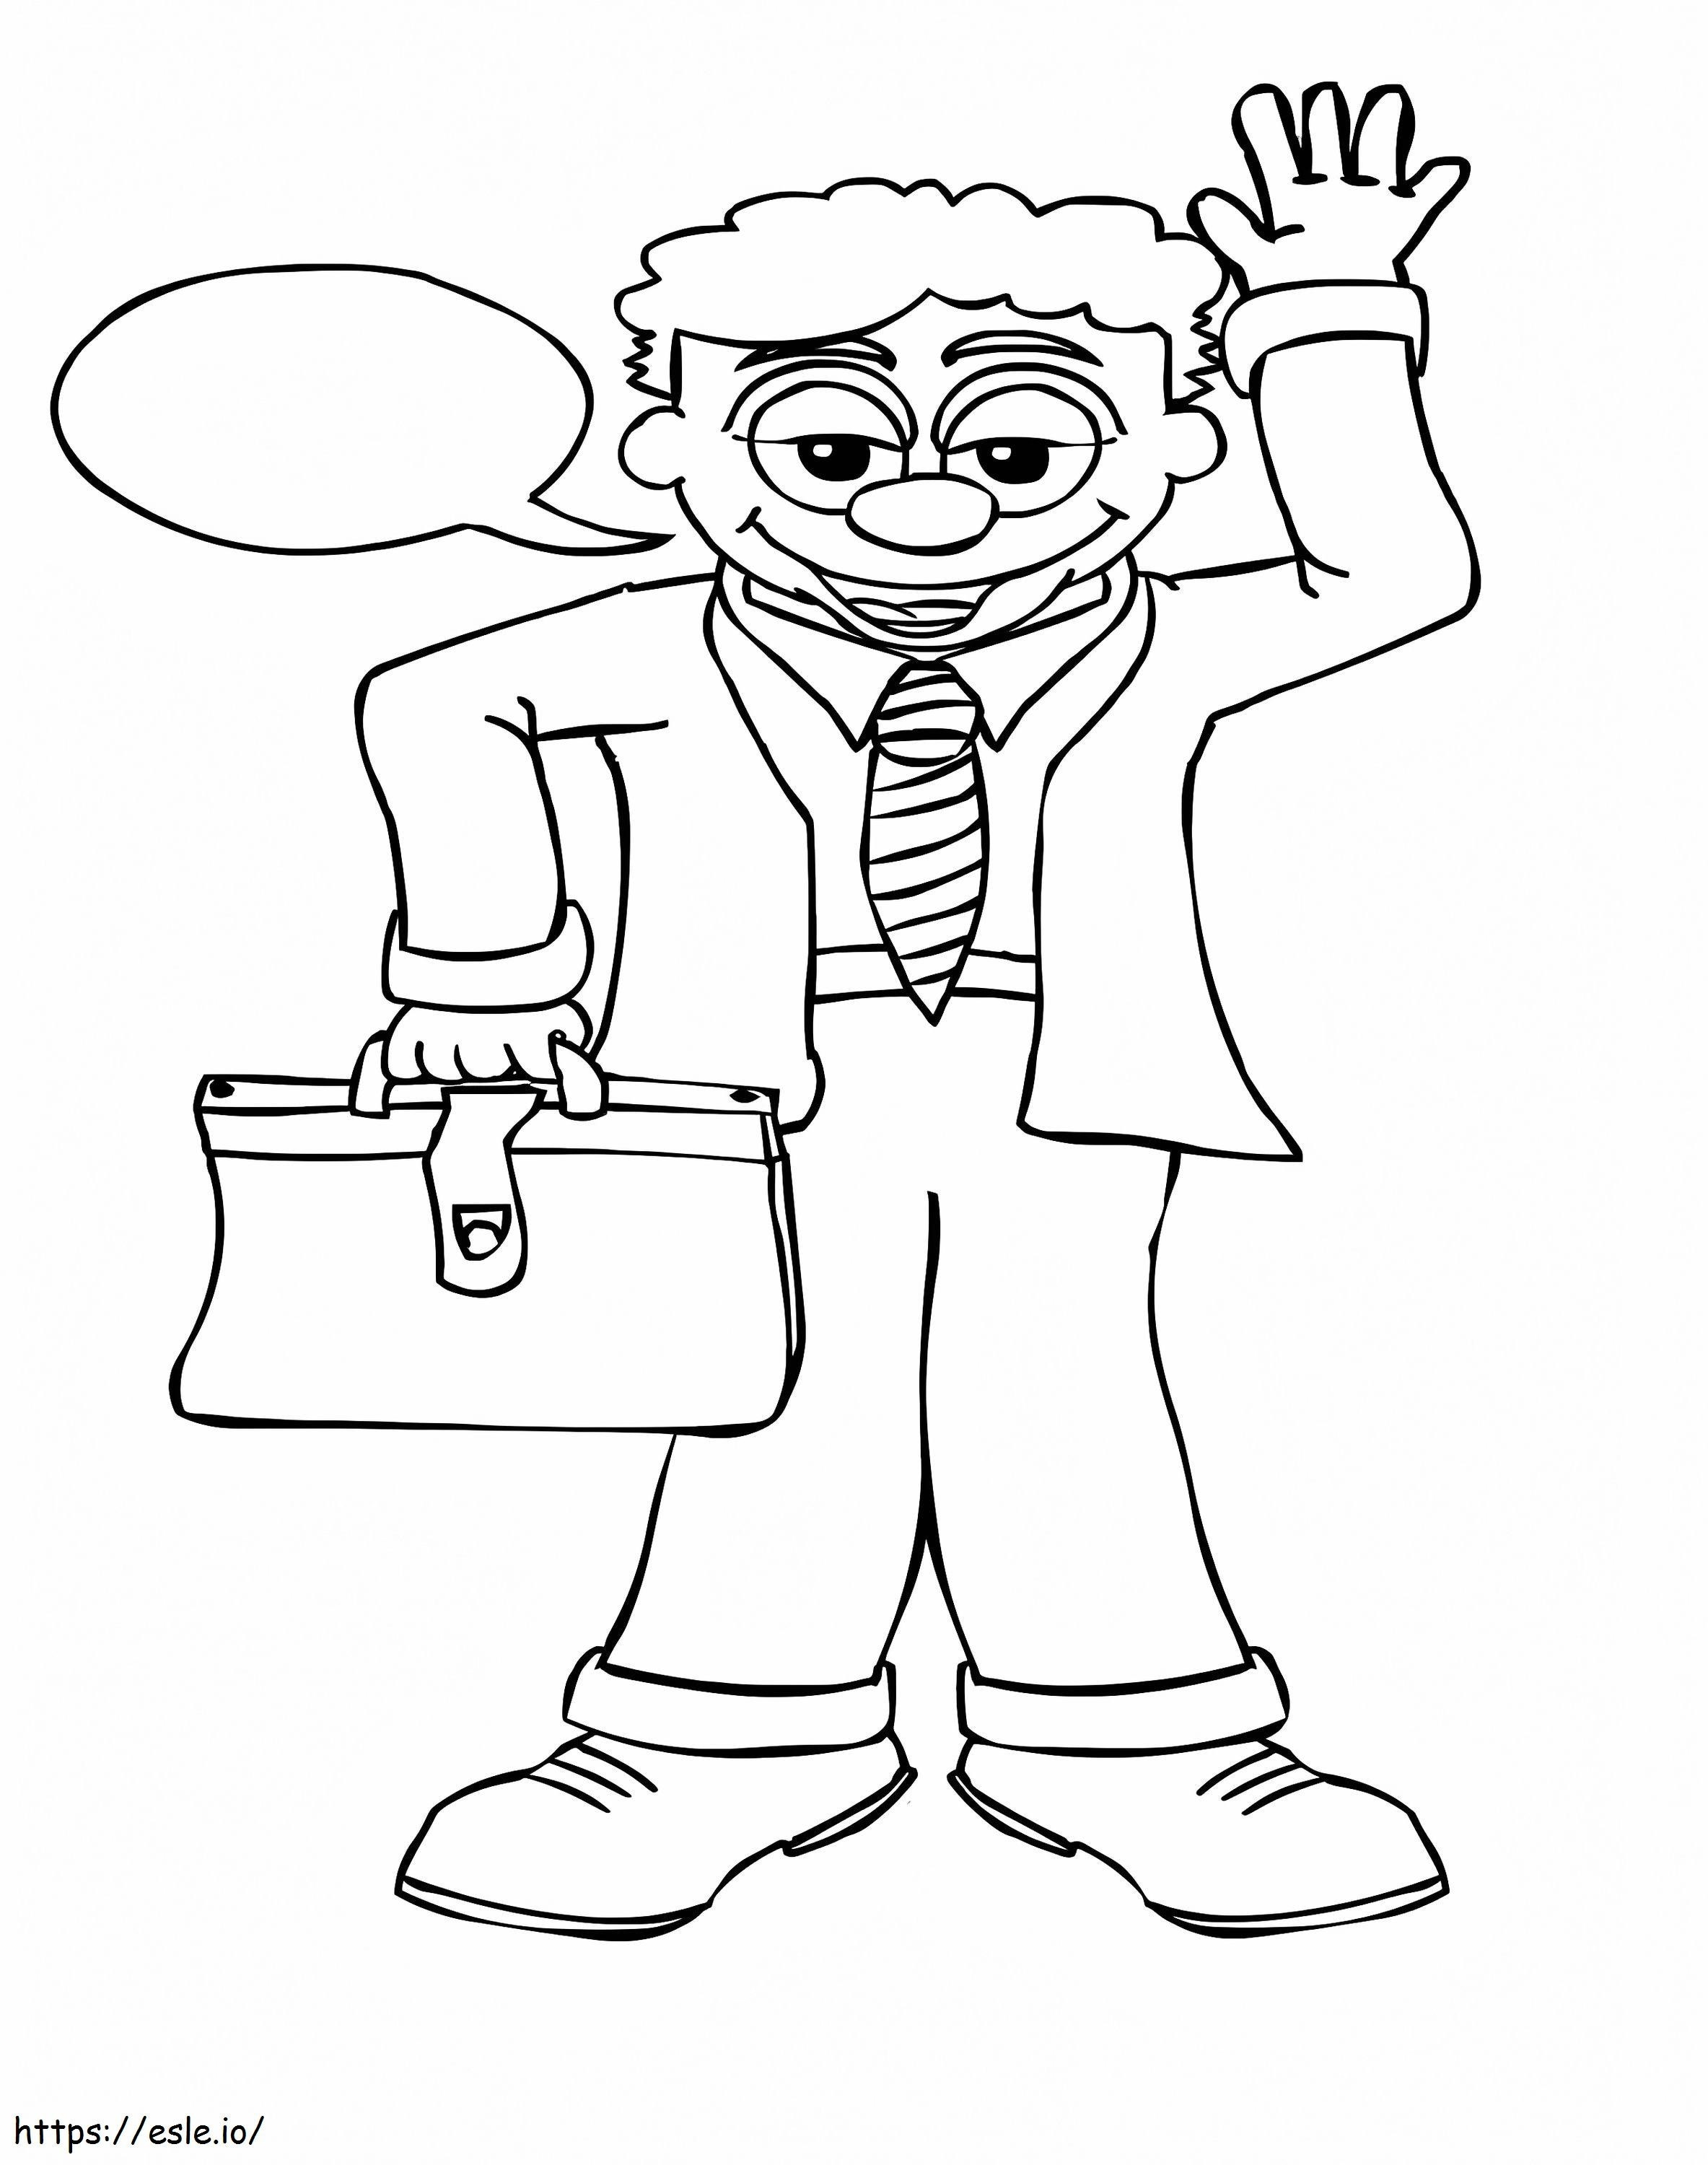 Cartoon Businessman coloring page